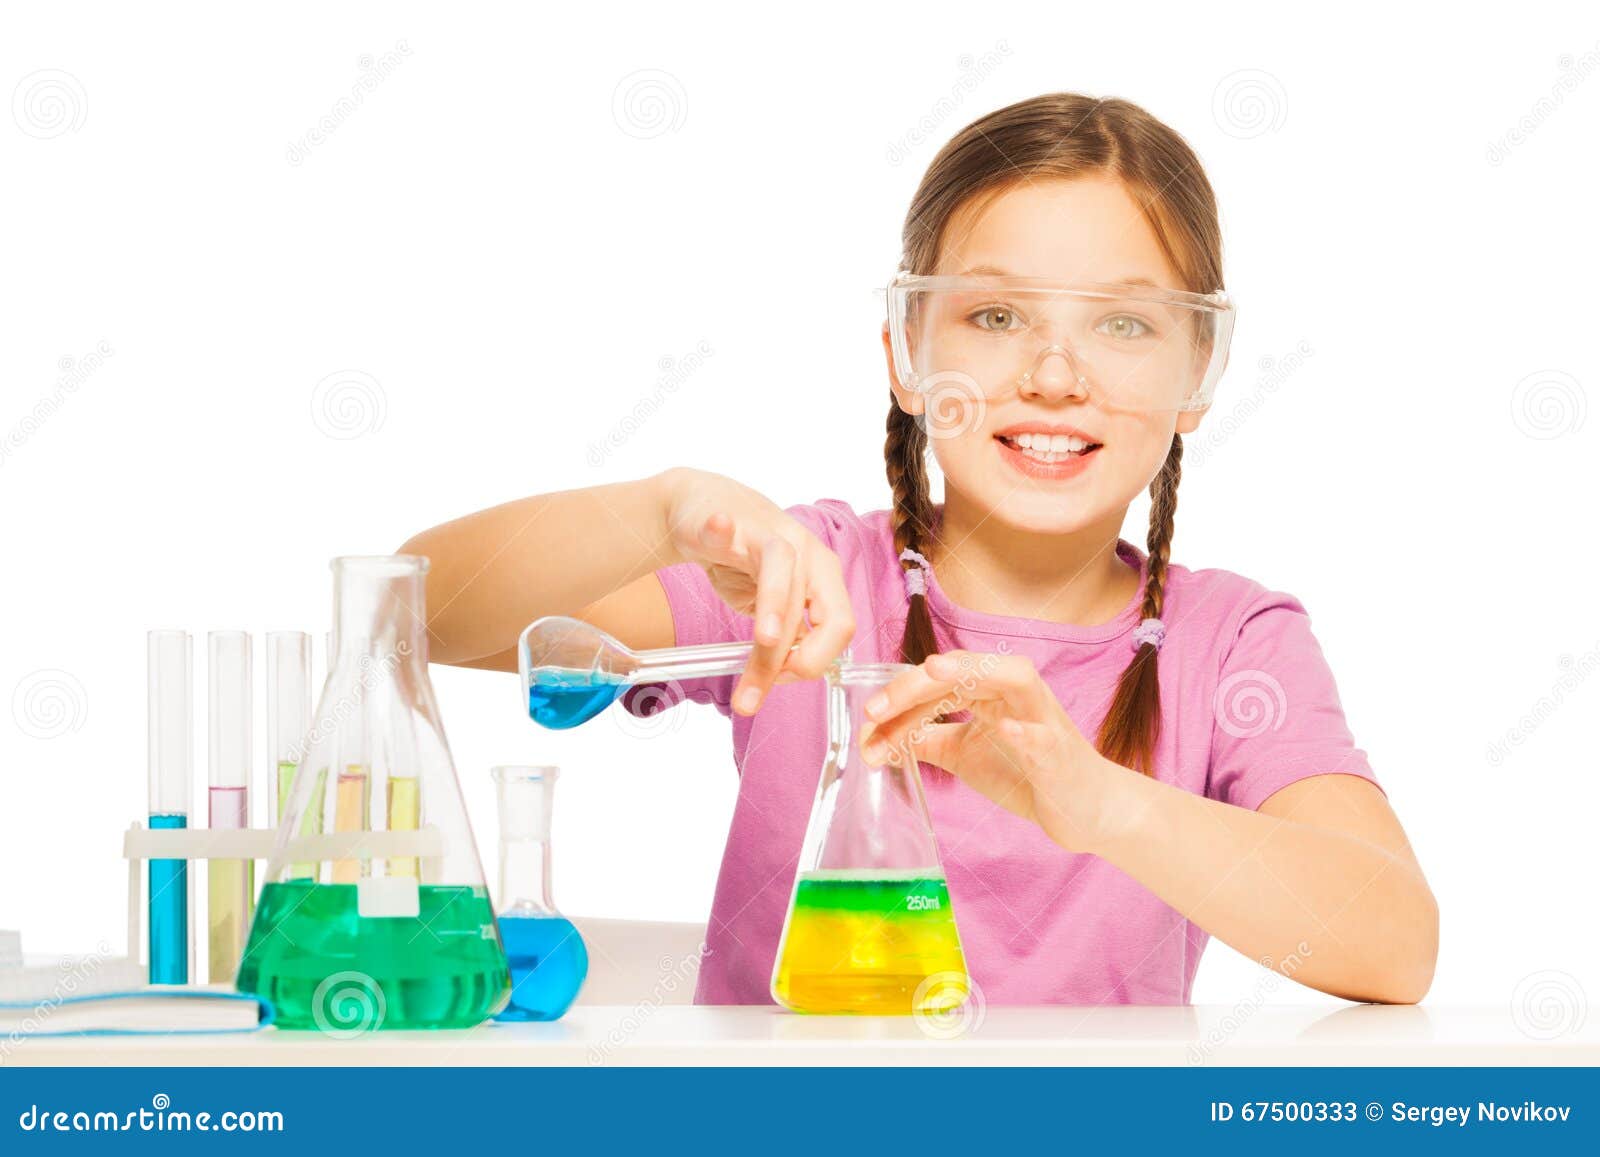 young schoolgirl mixing blue and yellow reactants